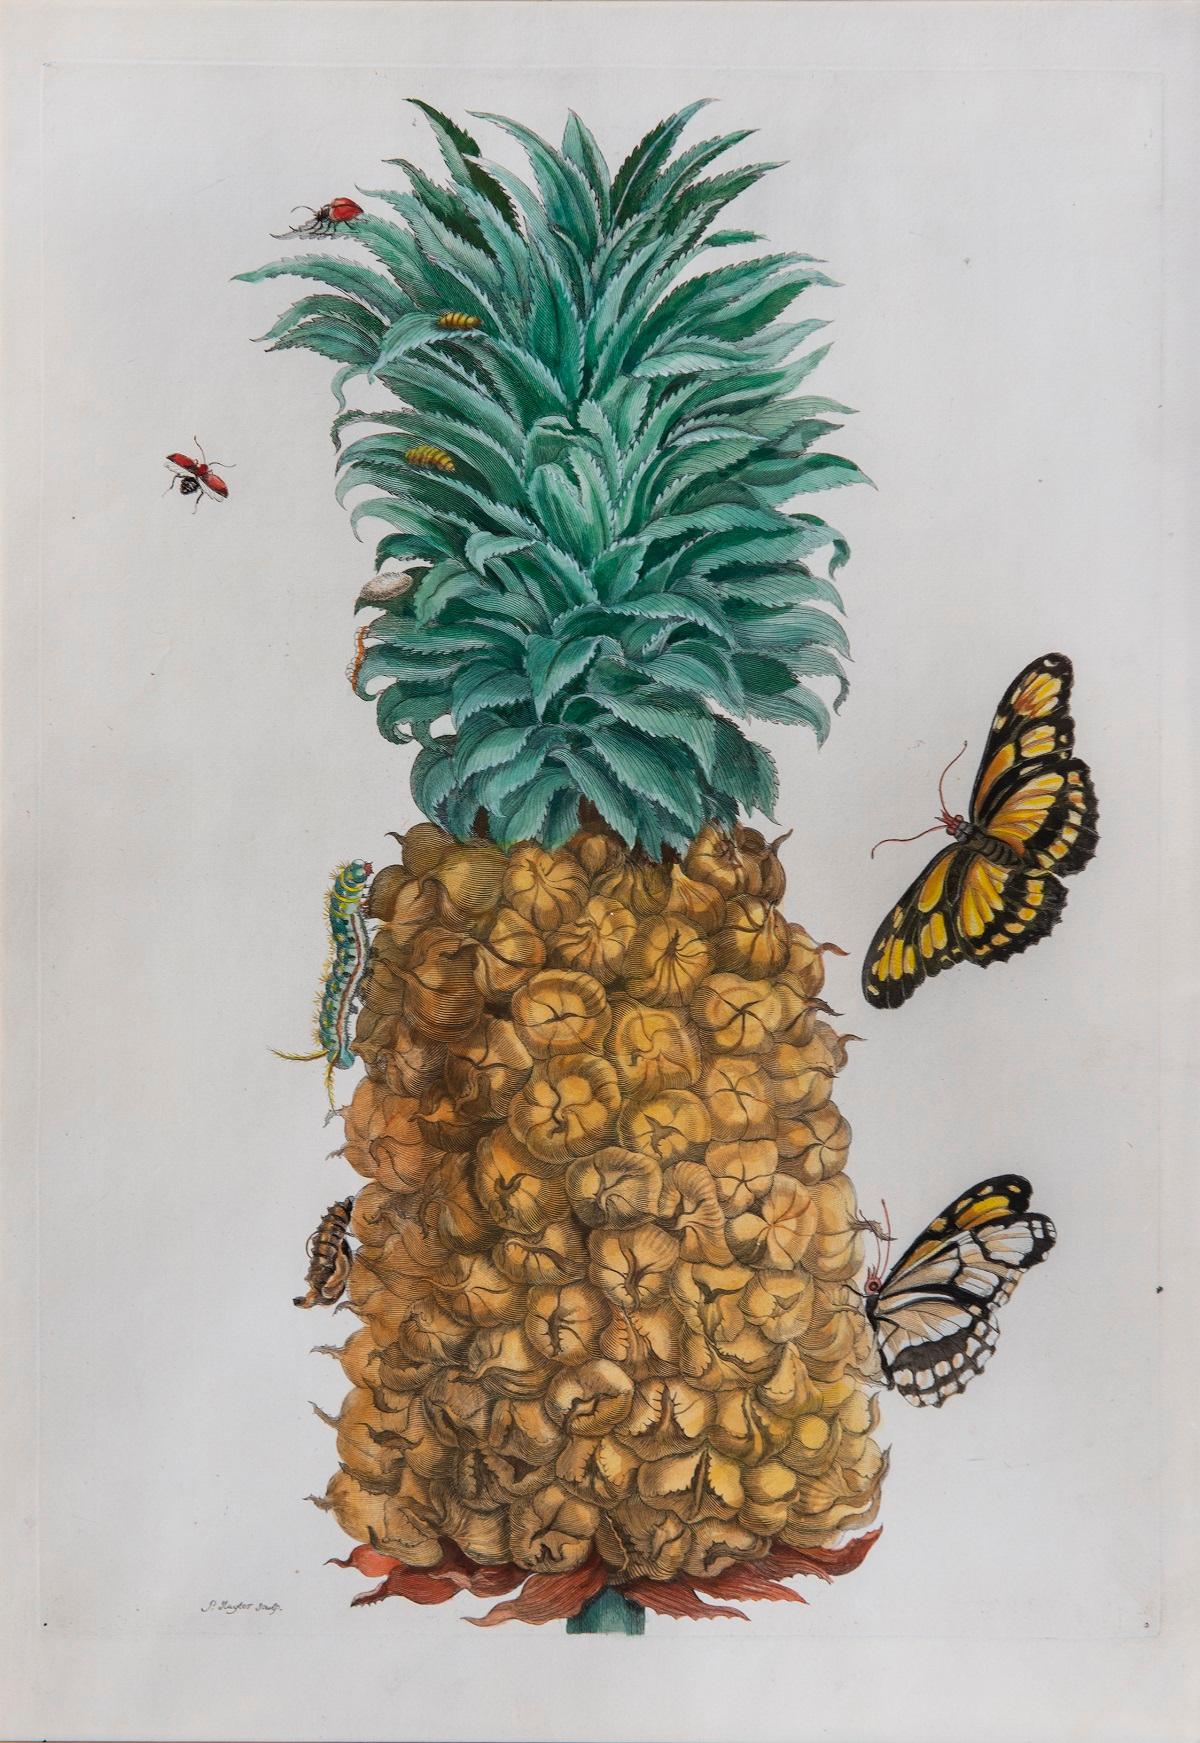 The Pineapple Fruit.  - Print by Maria Sybilla Merian